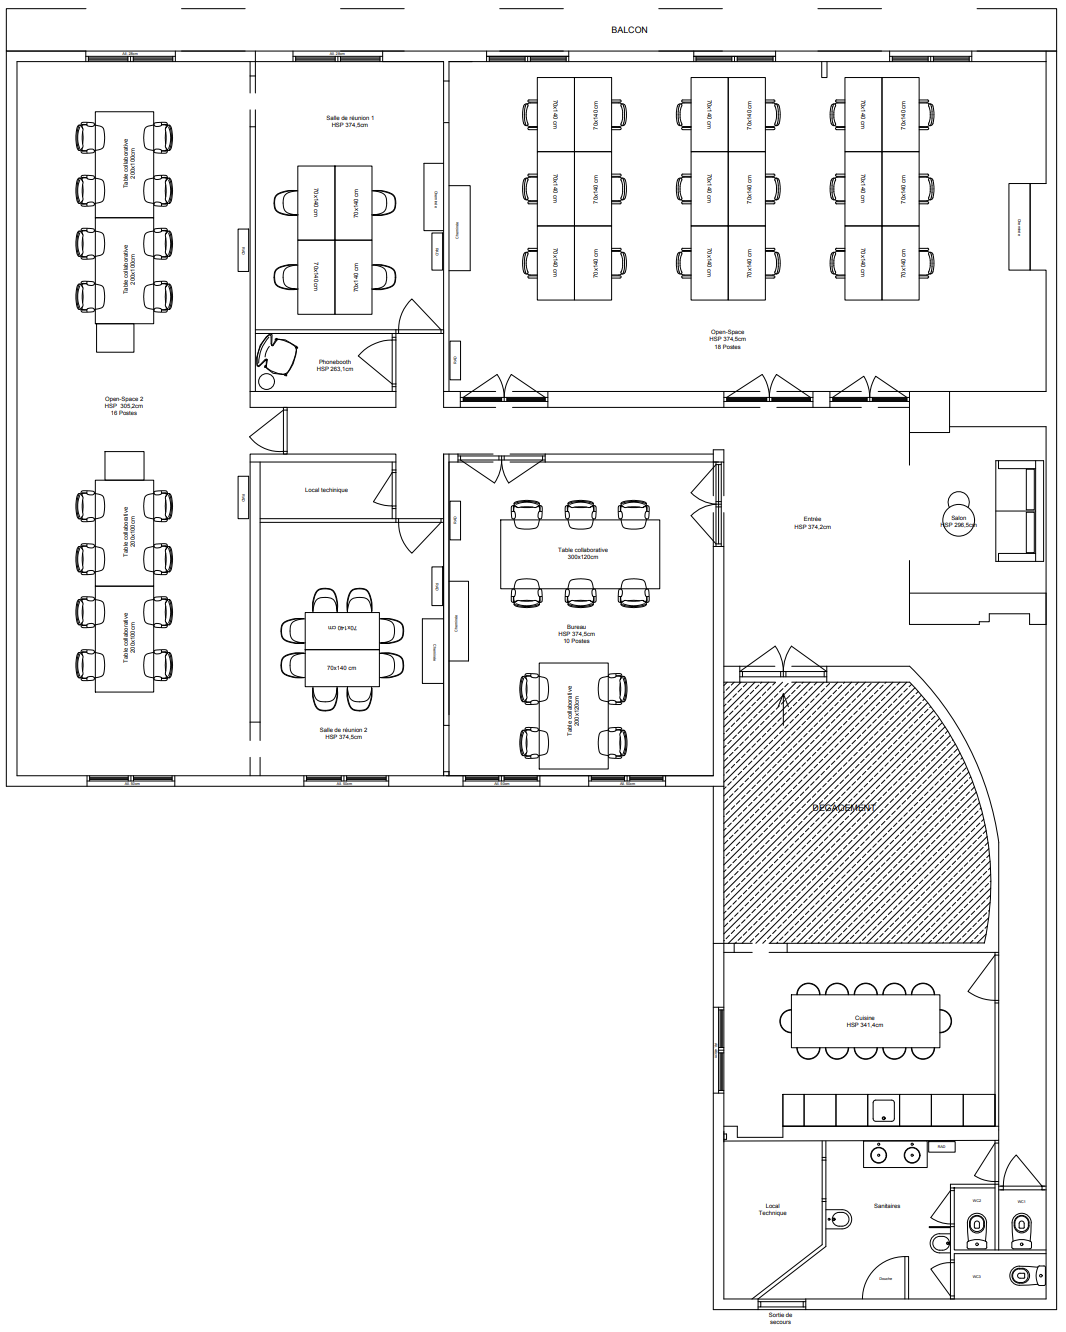 the office floor plan